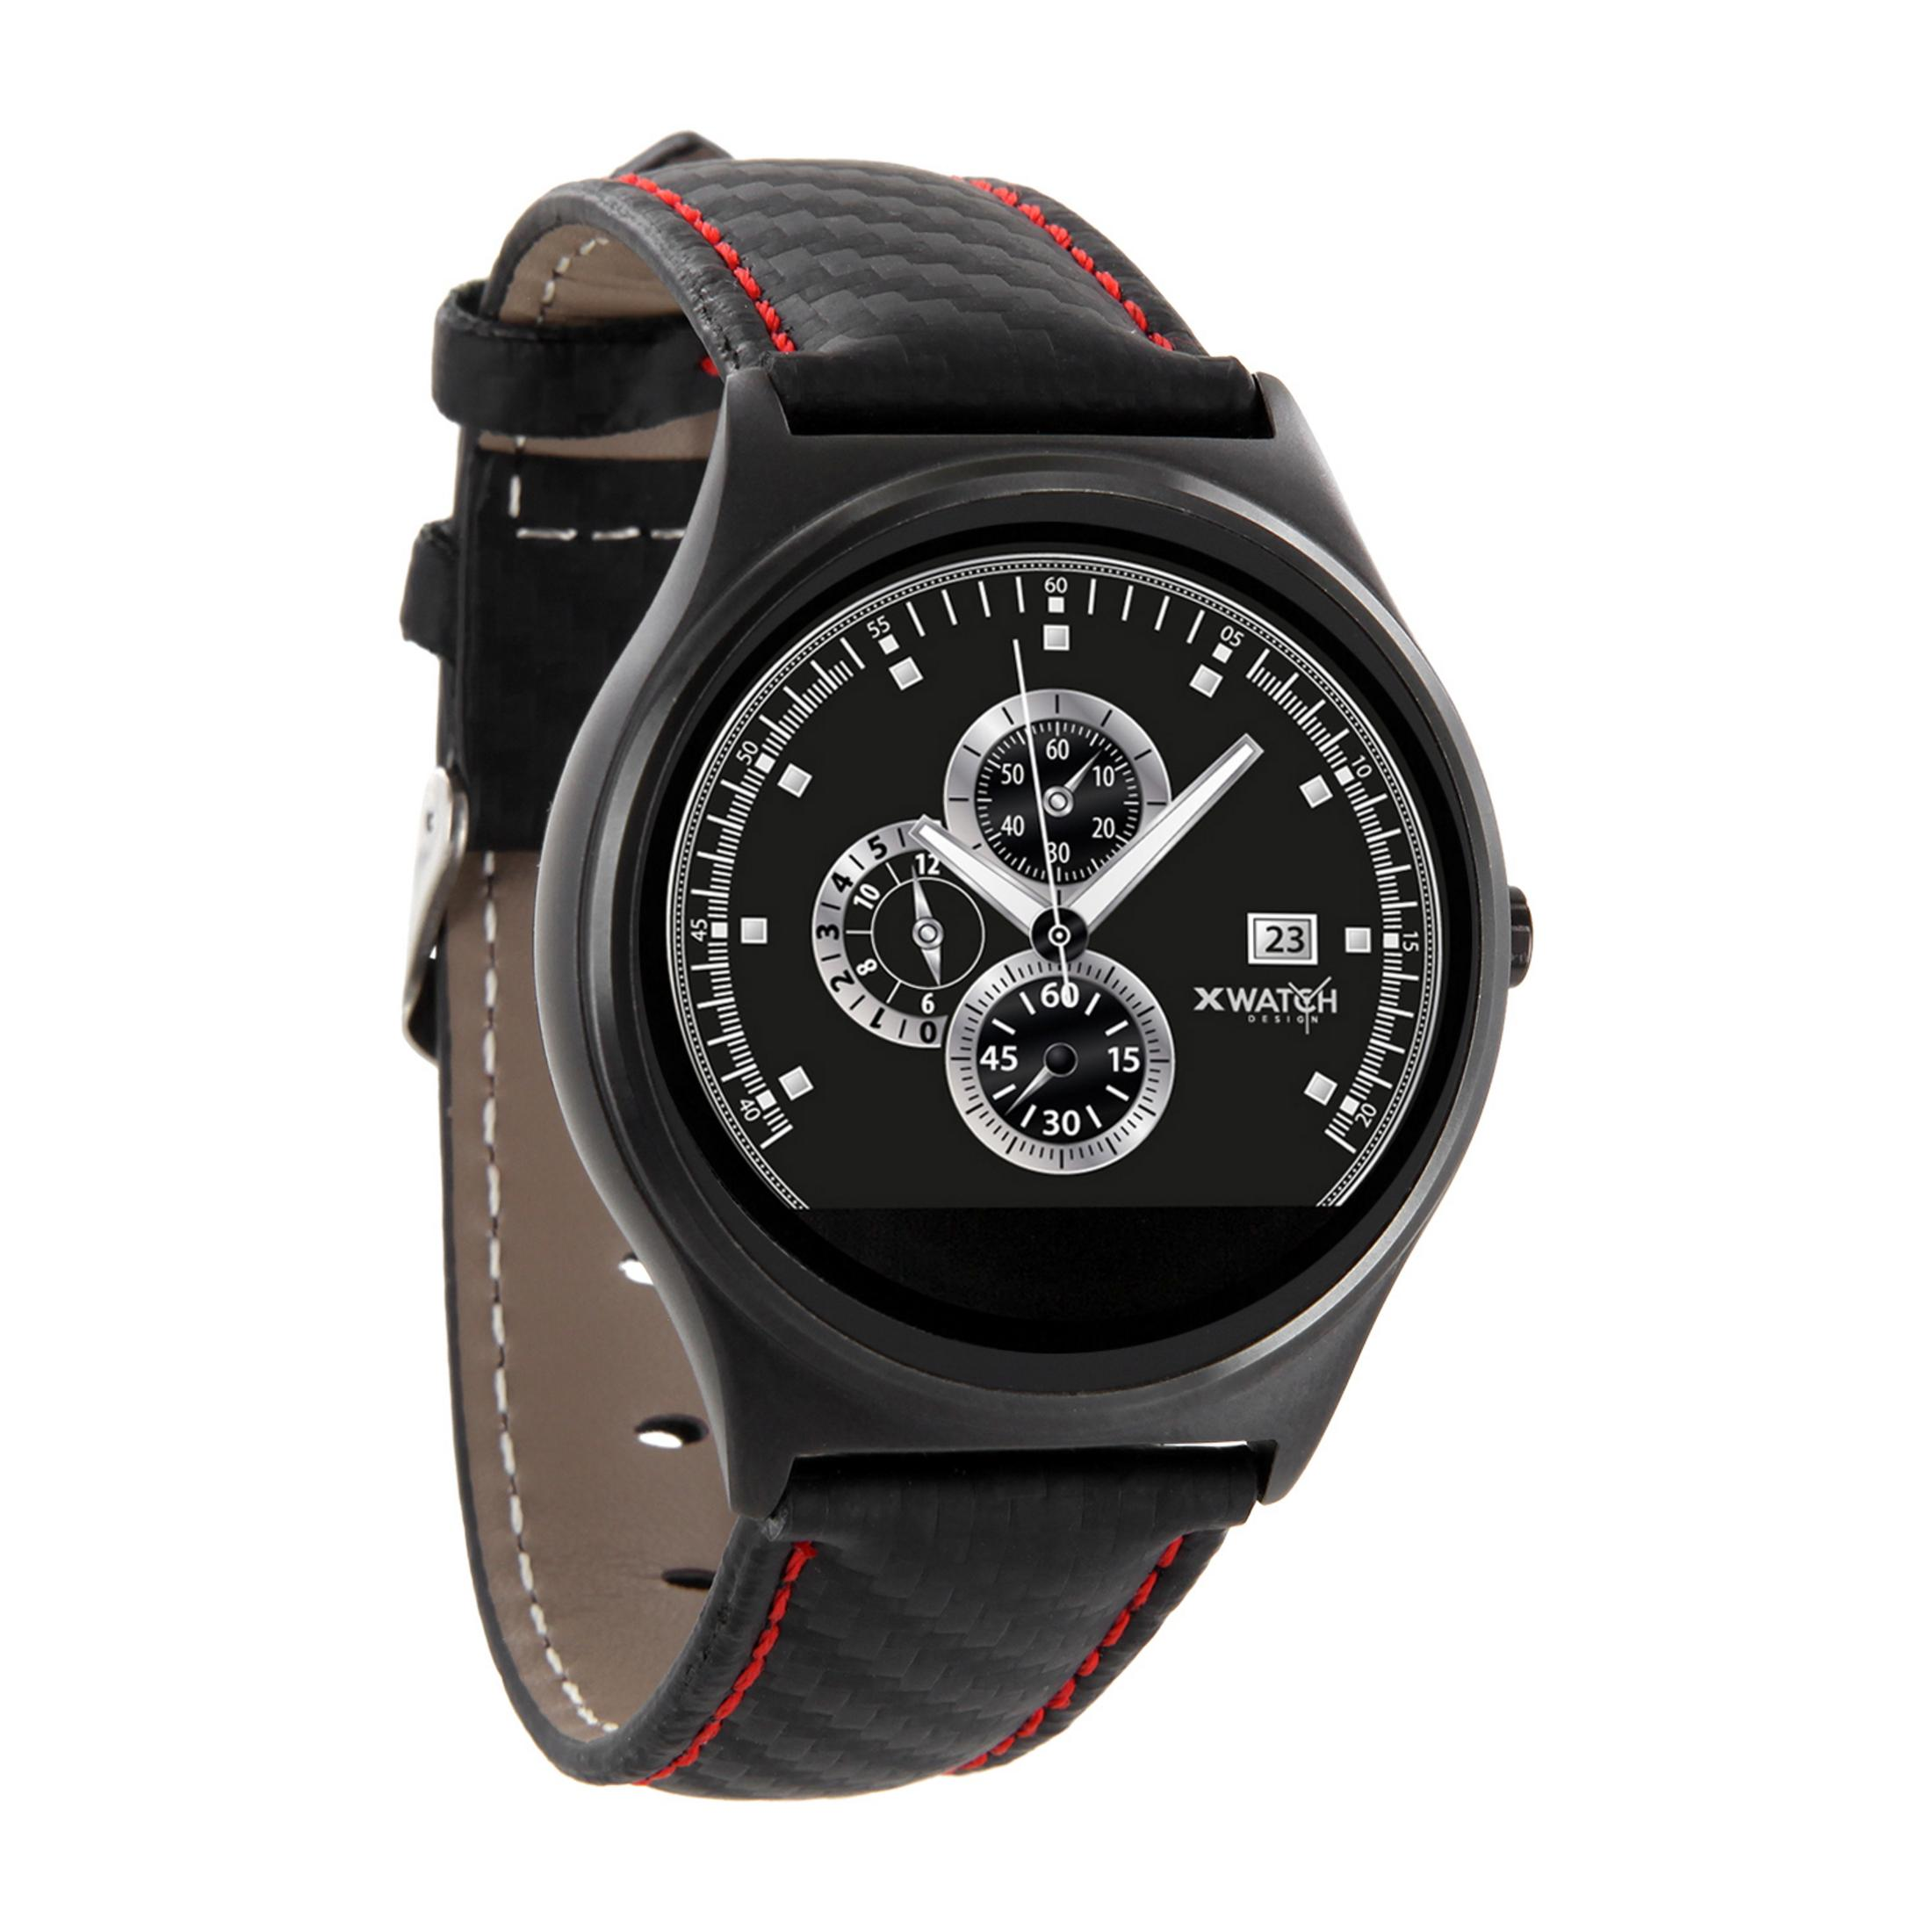 RED Armband: mm II CARBON Black Red Black / Carbon PRIME x 54016 - BLACK X-WATCH XW Metall XLYNE QIN mm, Chrome Gehäuse: 210 Echtleder, 22 Smartwatch